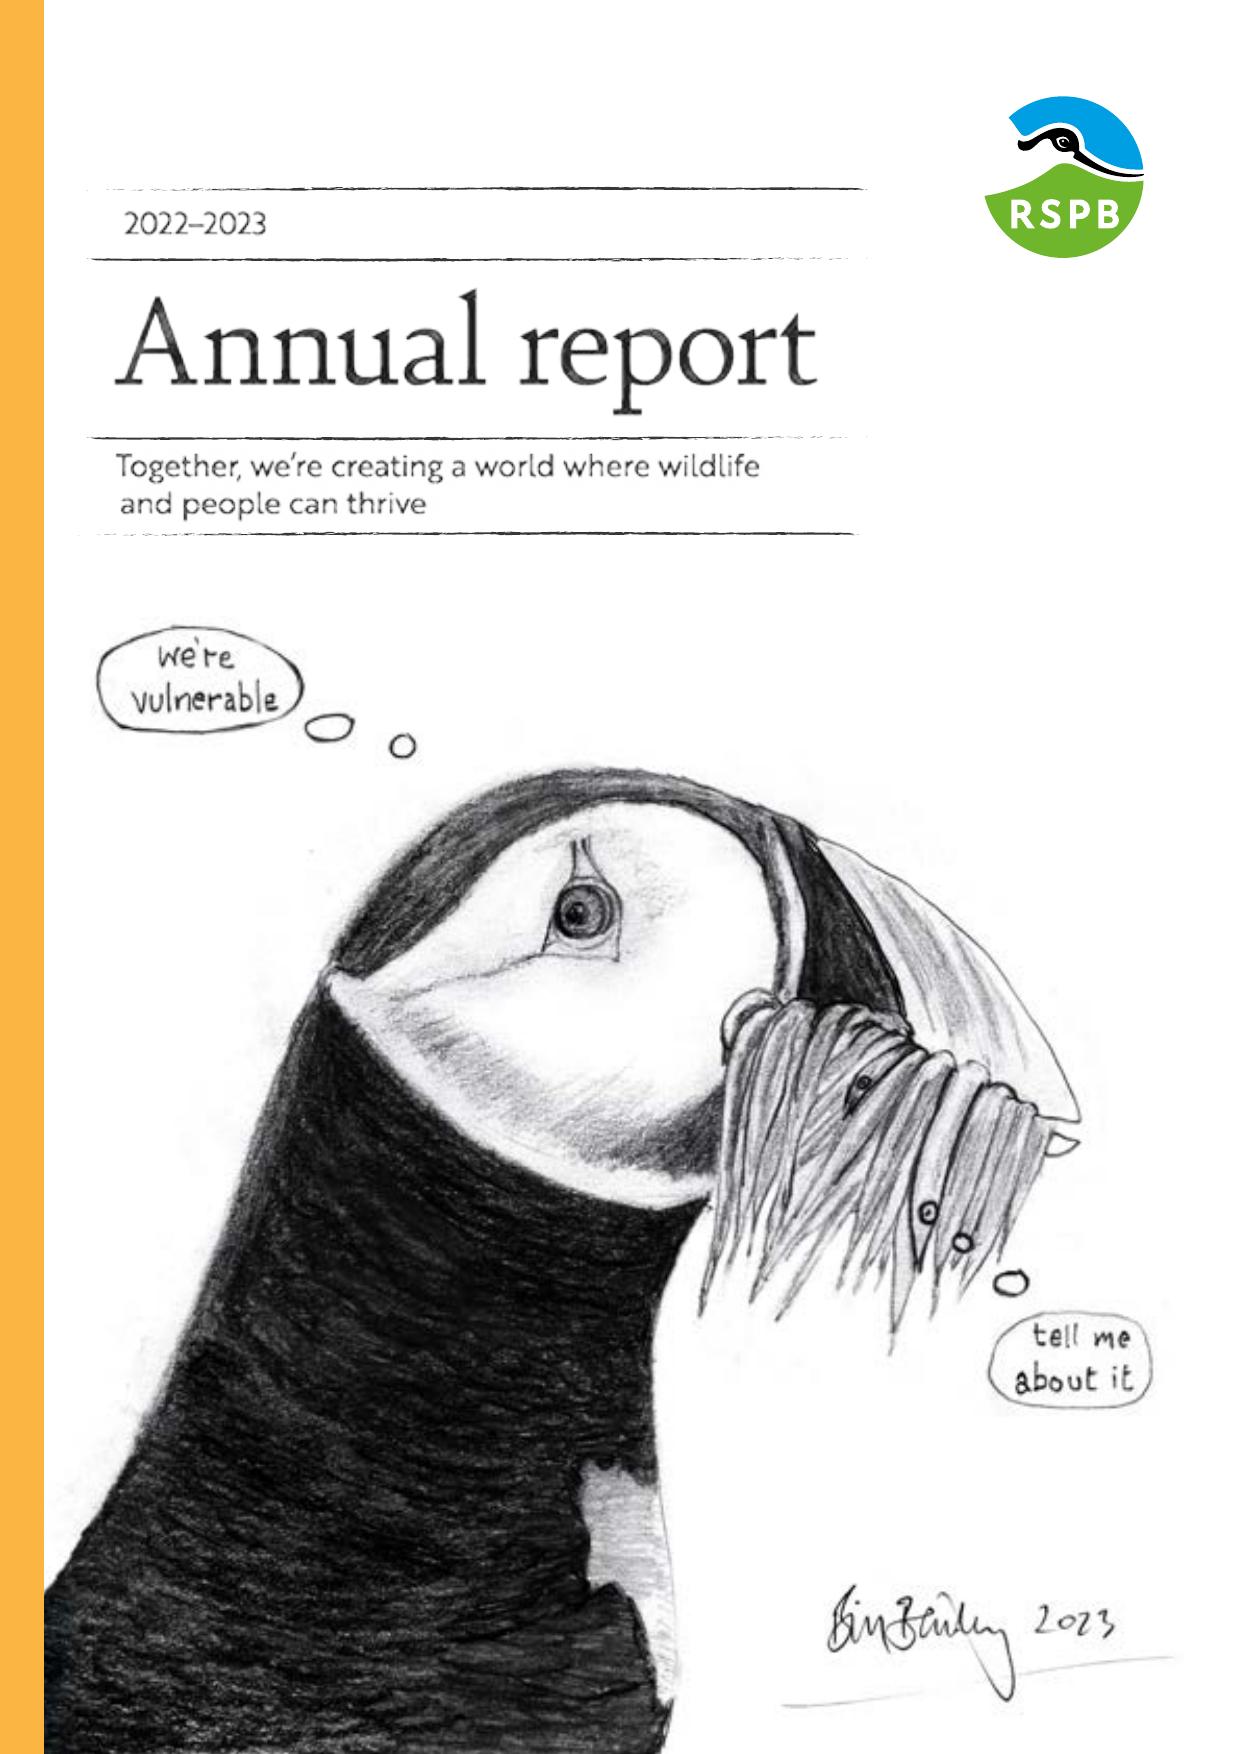 RSPB.ORG.UK 2022 Annual Report